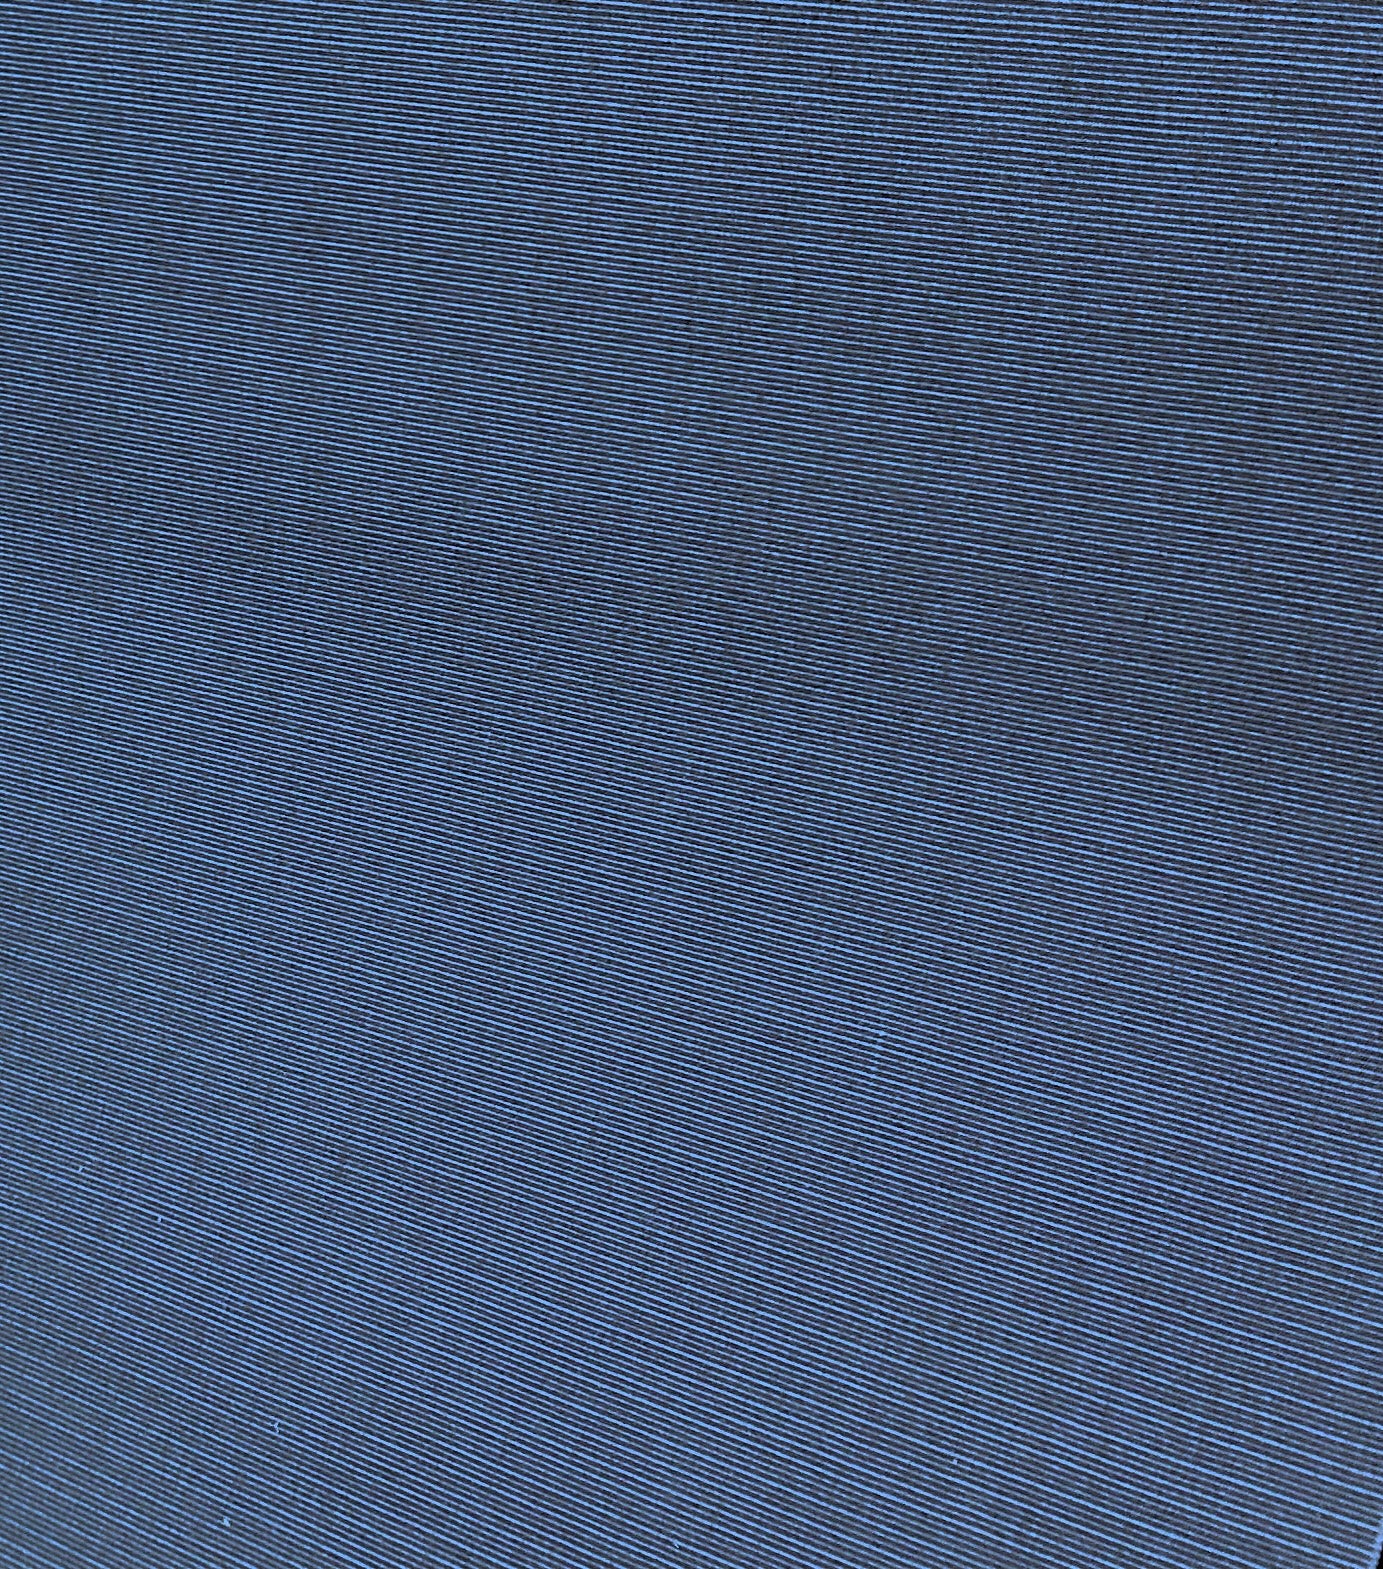 SUNBRELLA SHADE FABRIC AWNING MEDITERRANEAN BLUE TWEED 4653 WATERPROOF 47" WIDE BY THE YARD